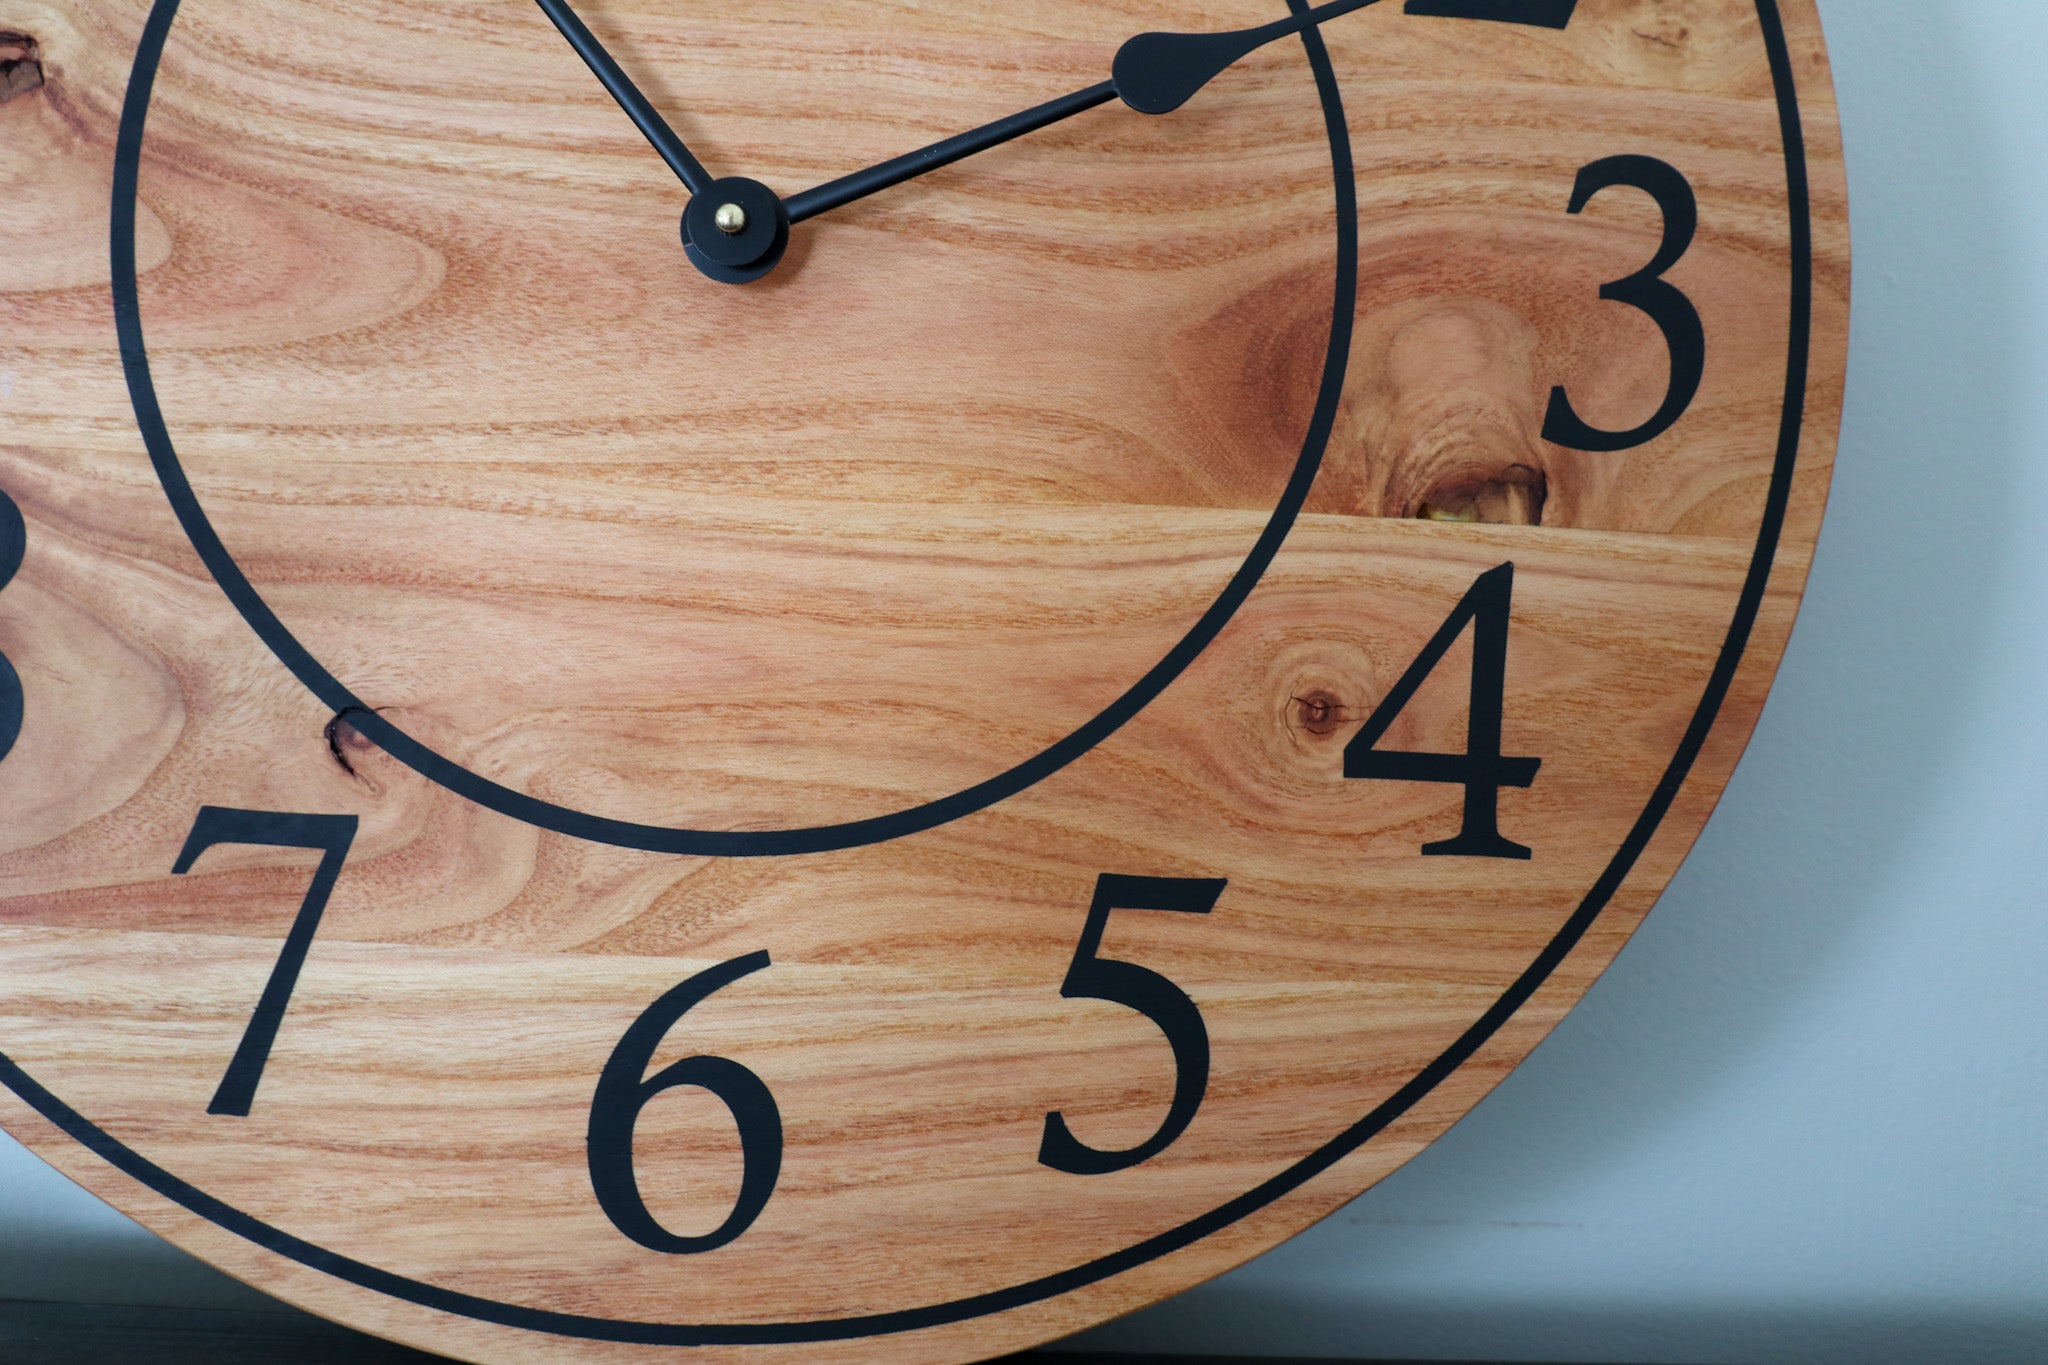 Locust Hardwood Large Wall Clock with Regular Numbers